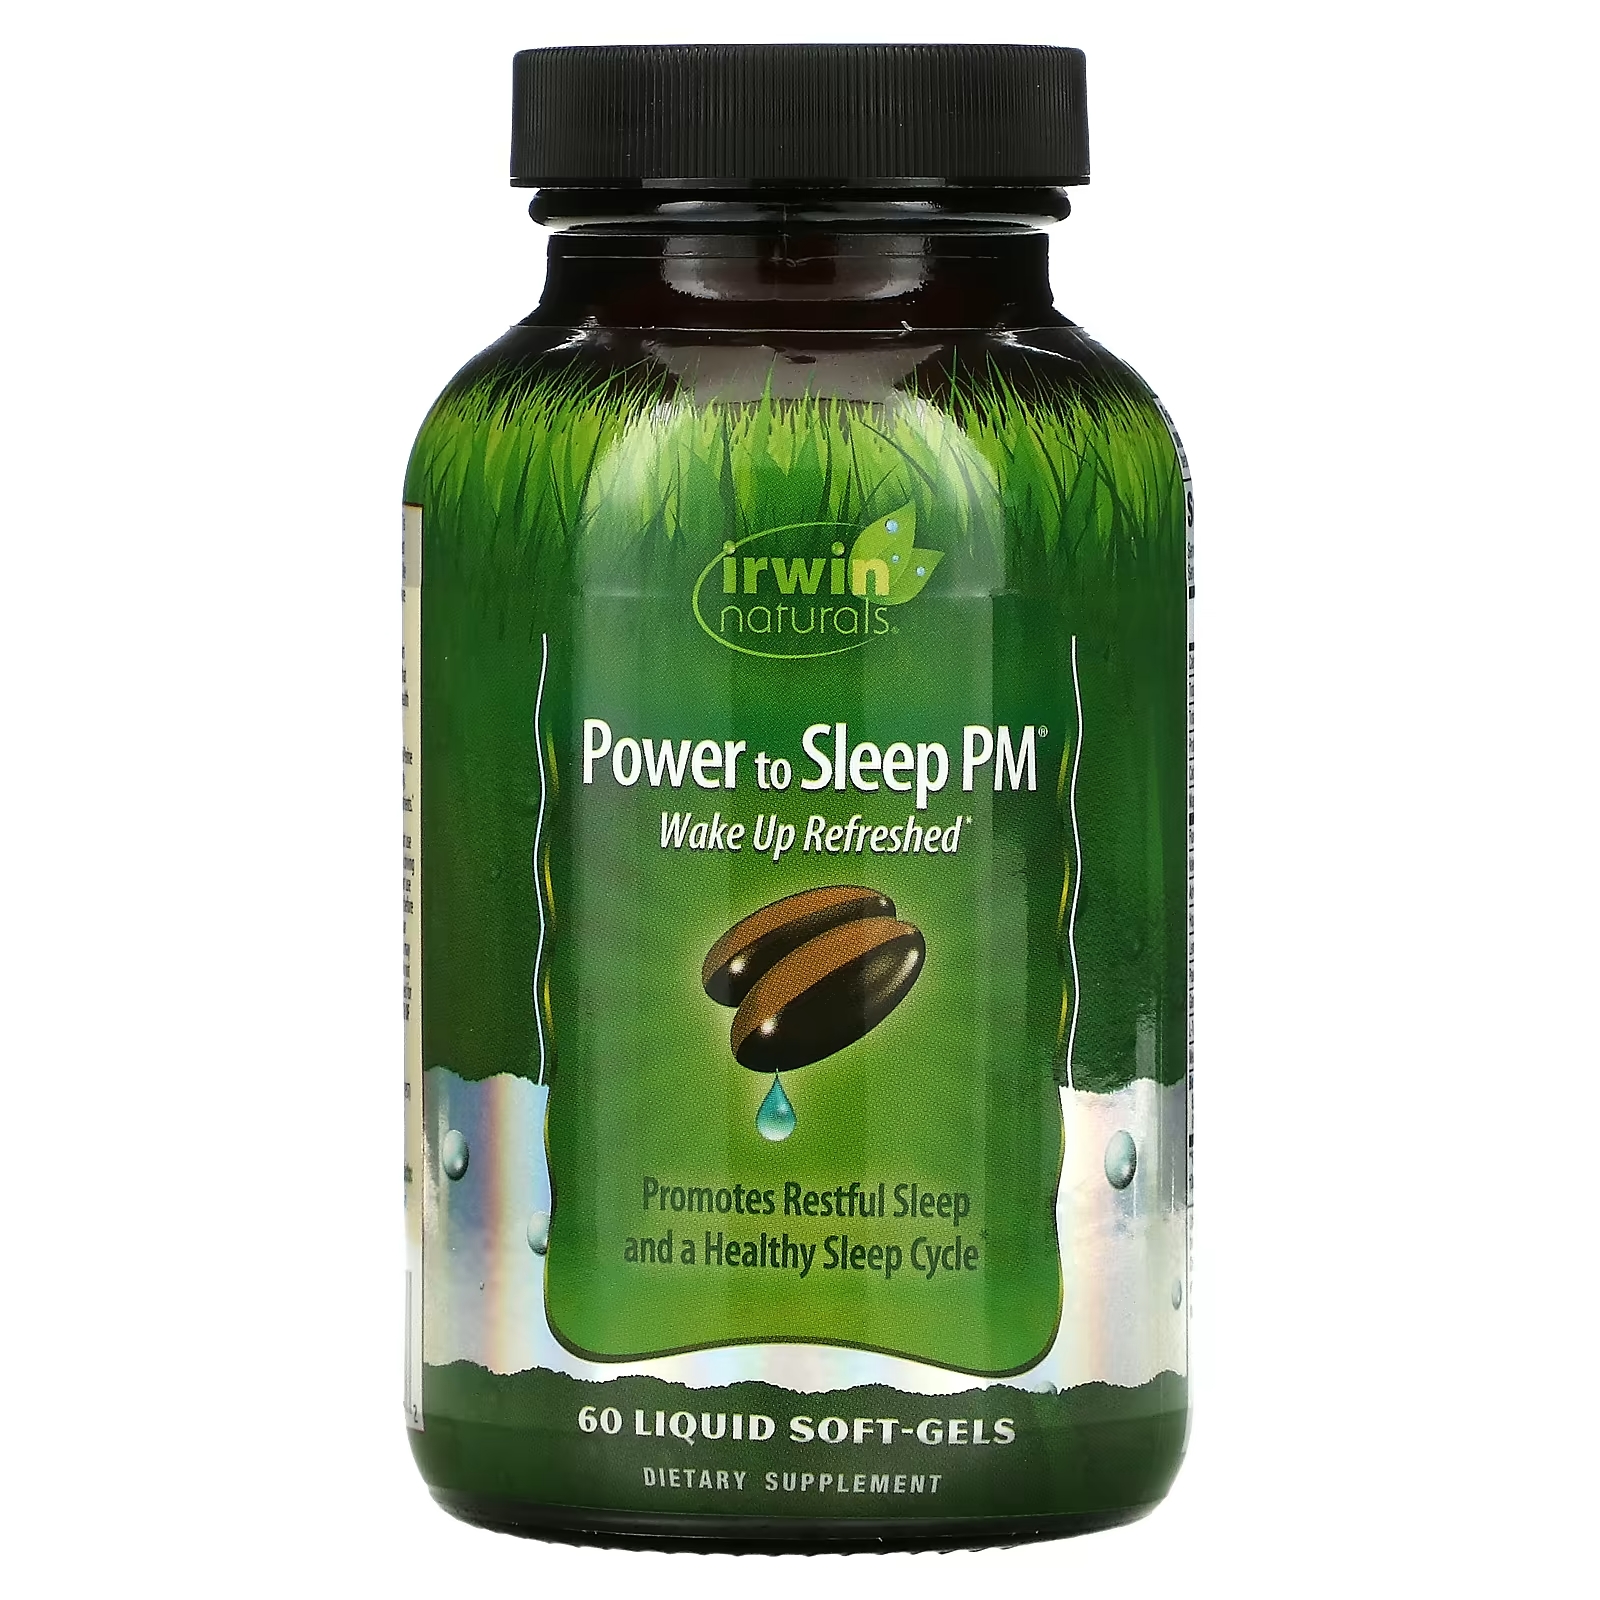 Пищевая Добавка Irwin Naturals Power to Sleep, 60 мягких капсул irwin naturals power to sleep pm успокаивающее 60 капсул с жидкостью